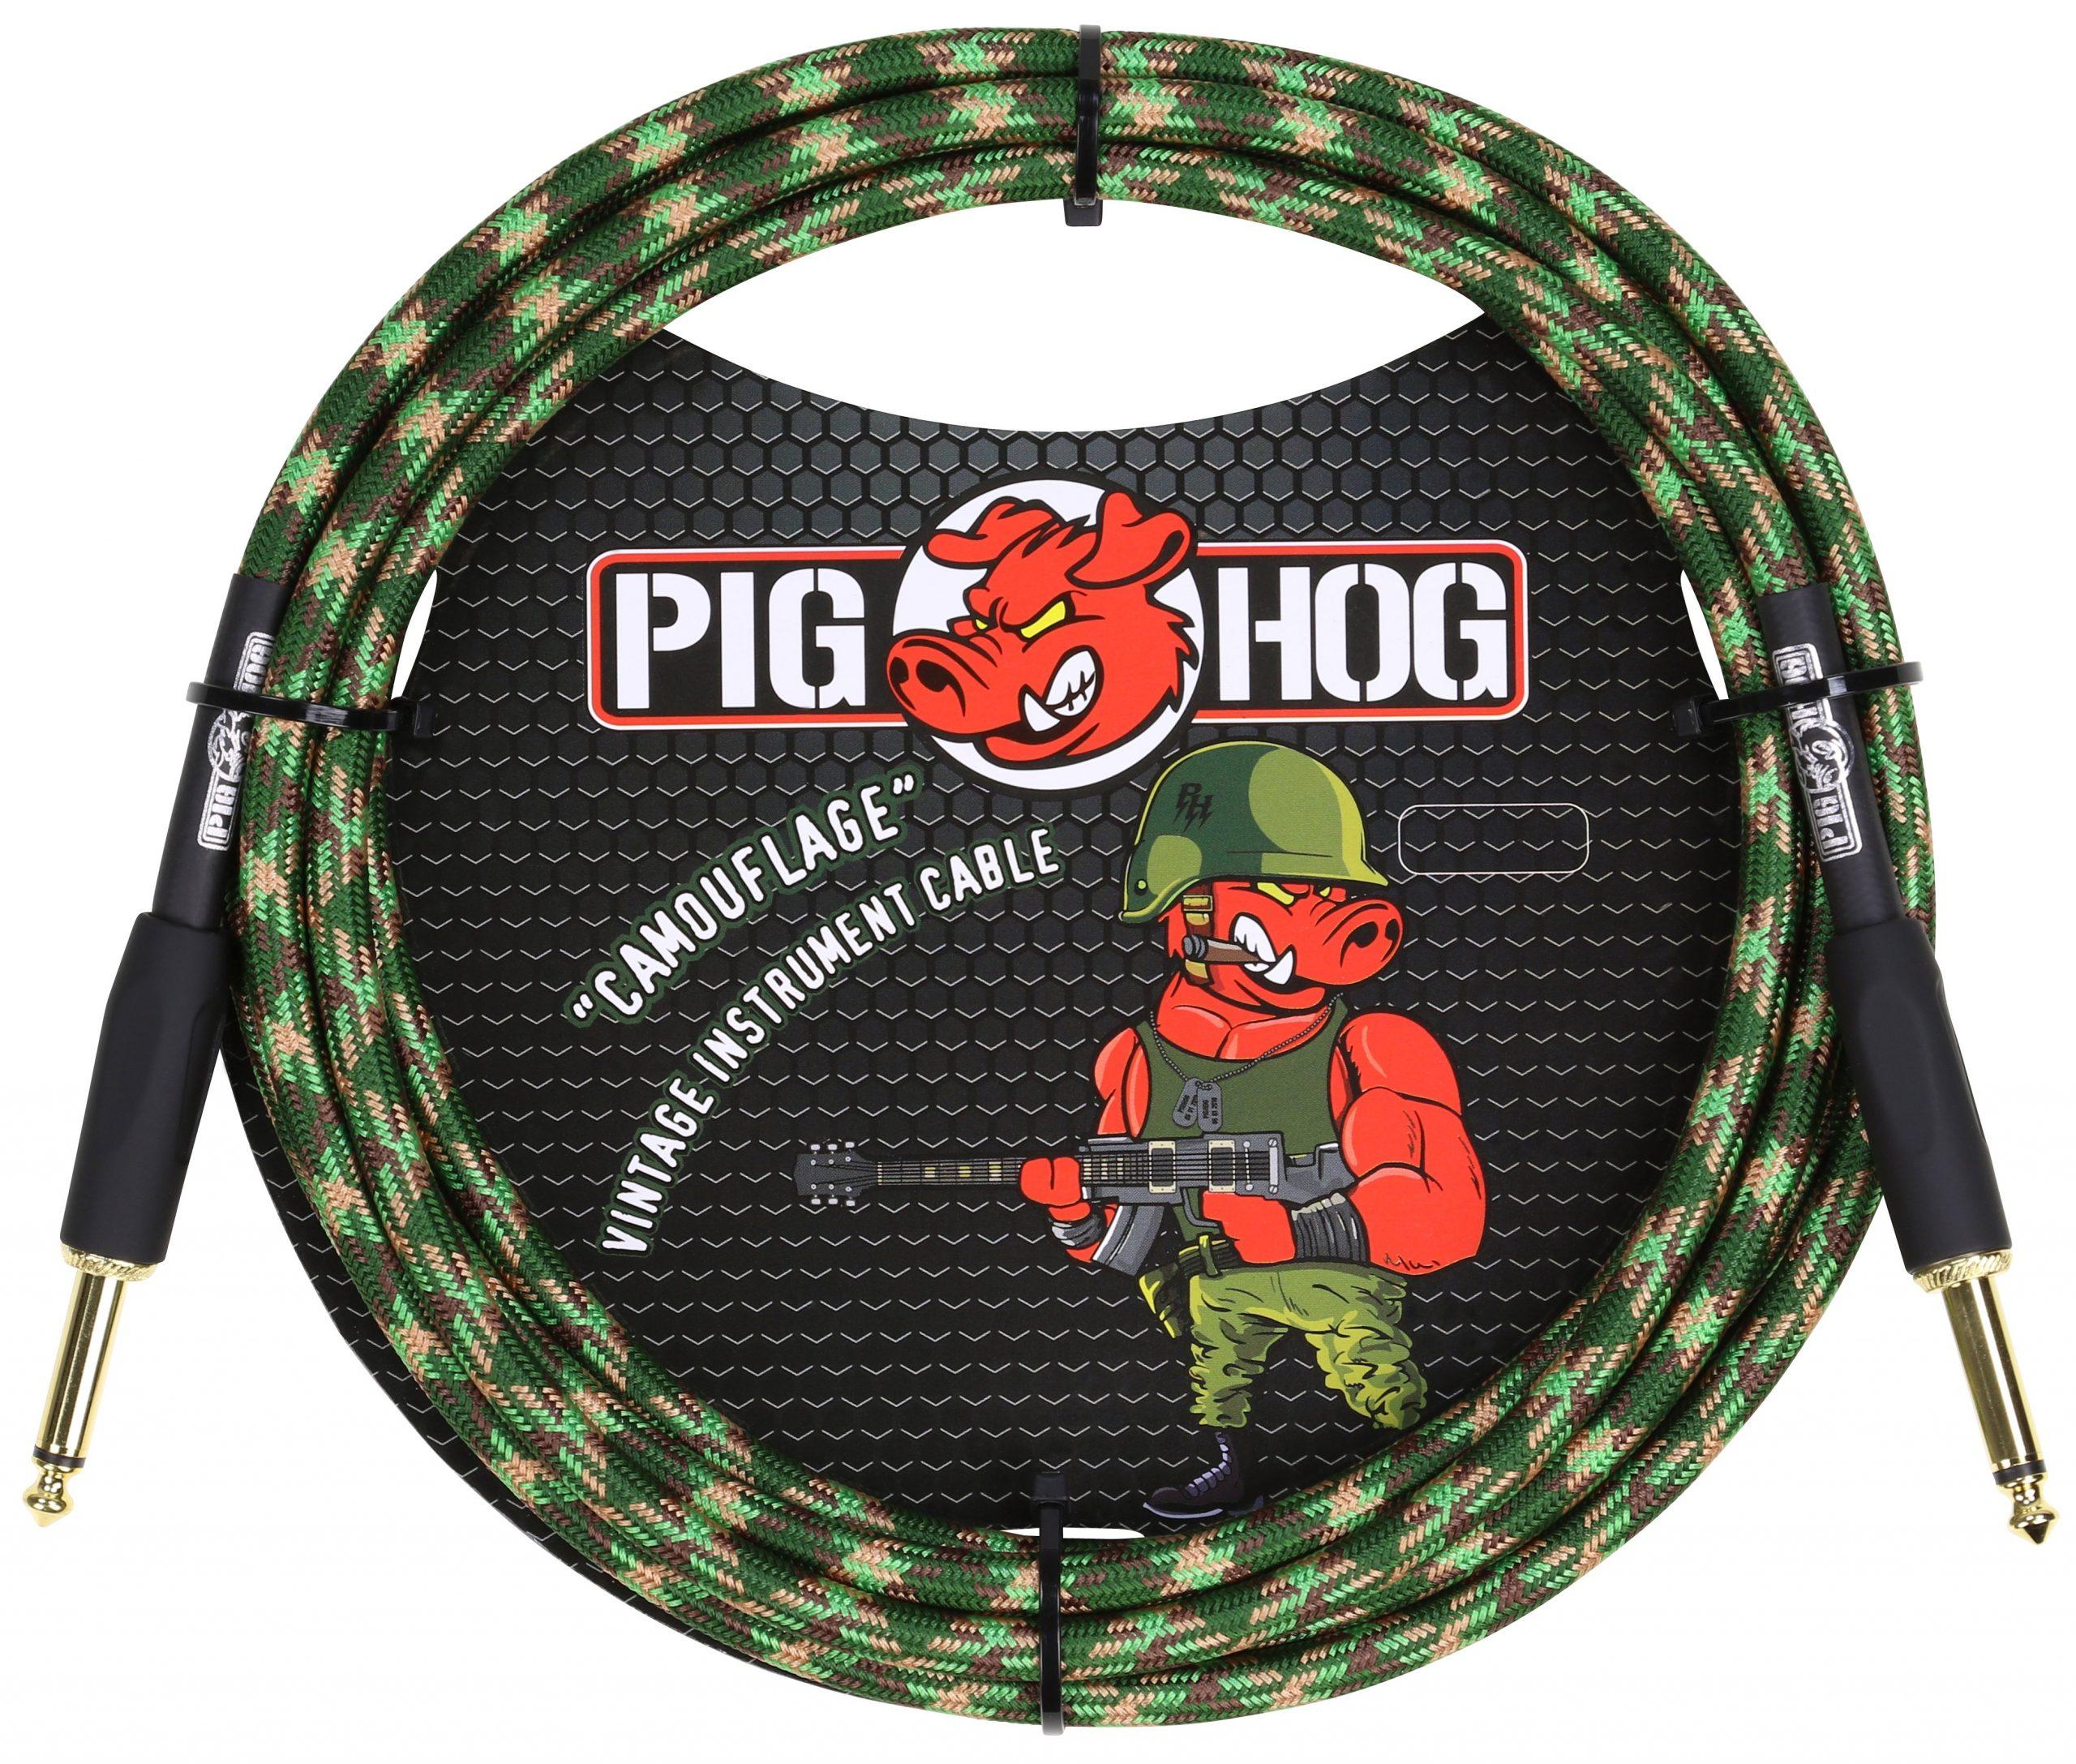 Pig Hog "Camouflage" Instrument Cable, 10ft